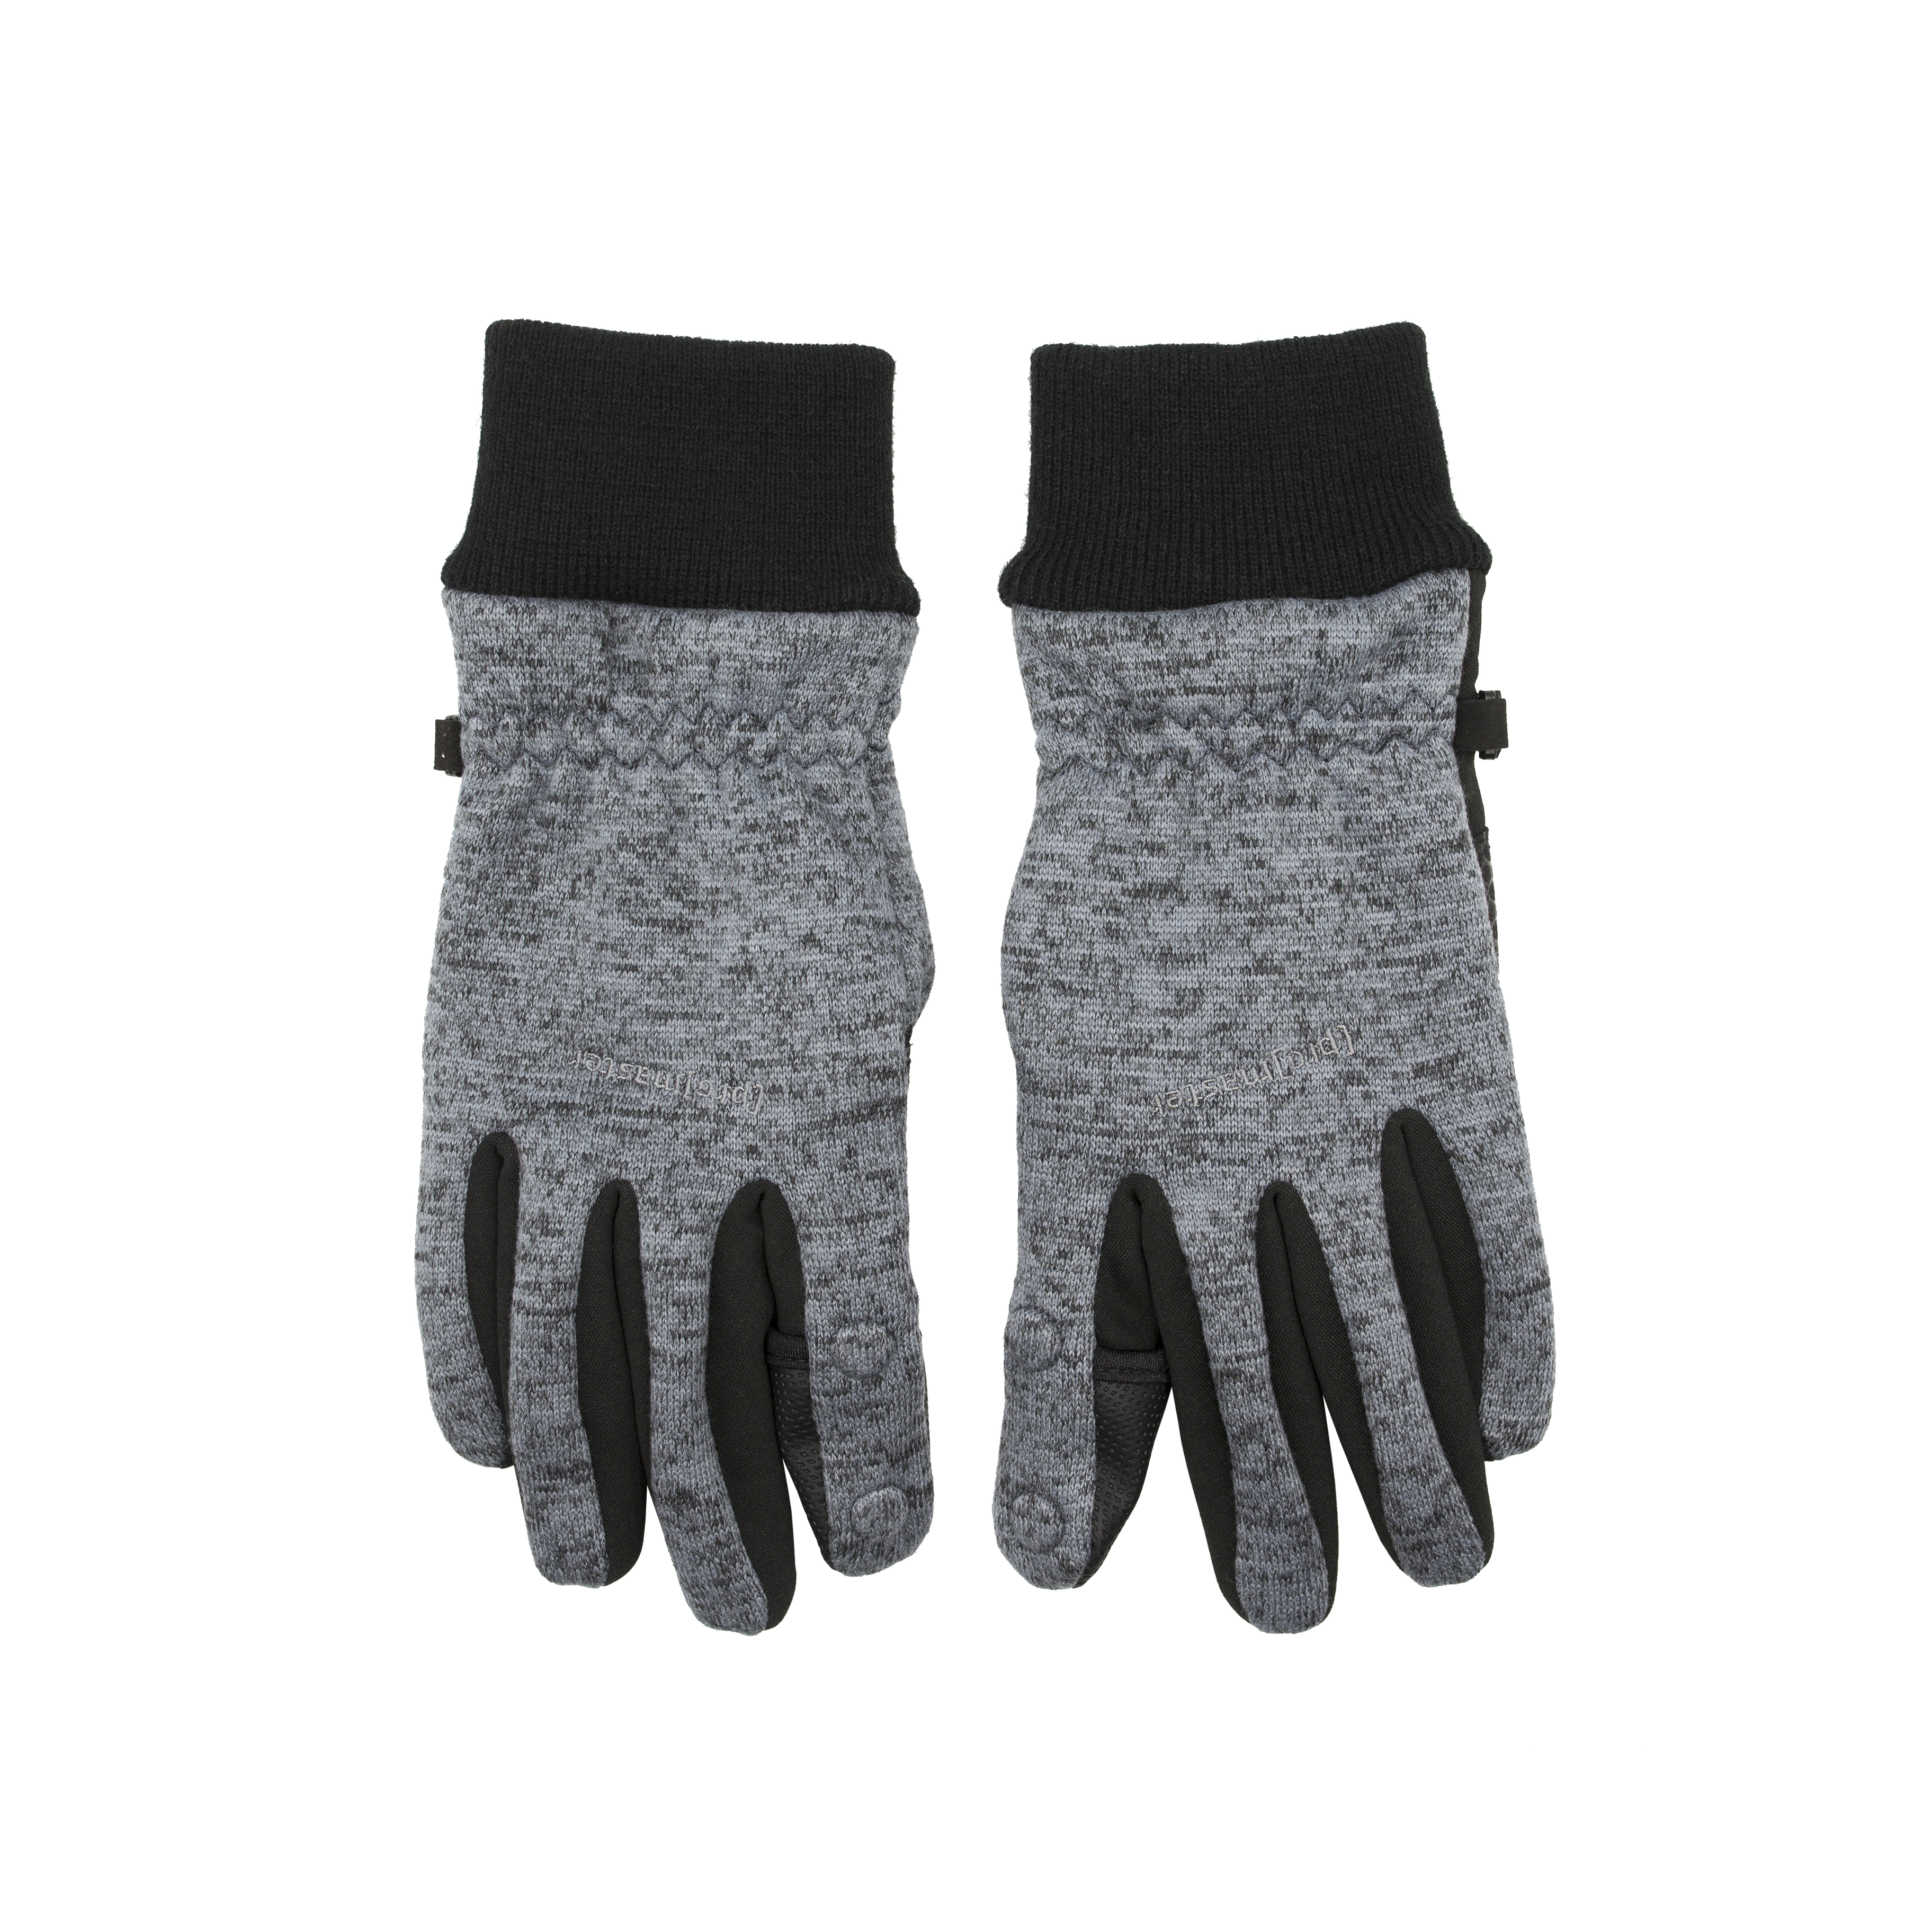 Promaster 9848 Knit Photo Gloves (M)